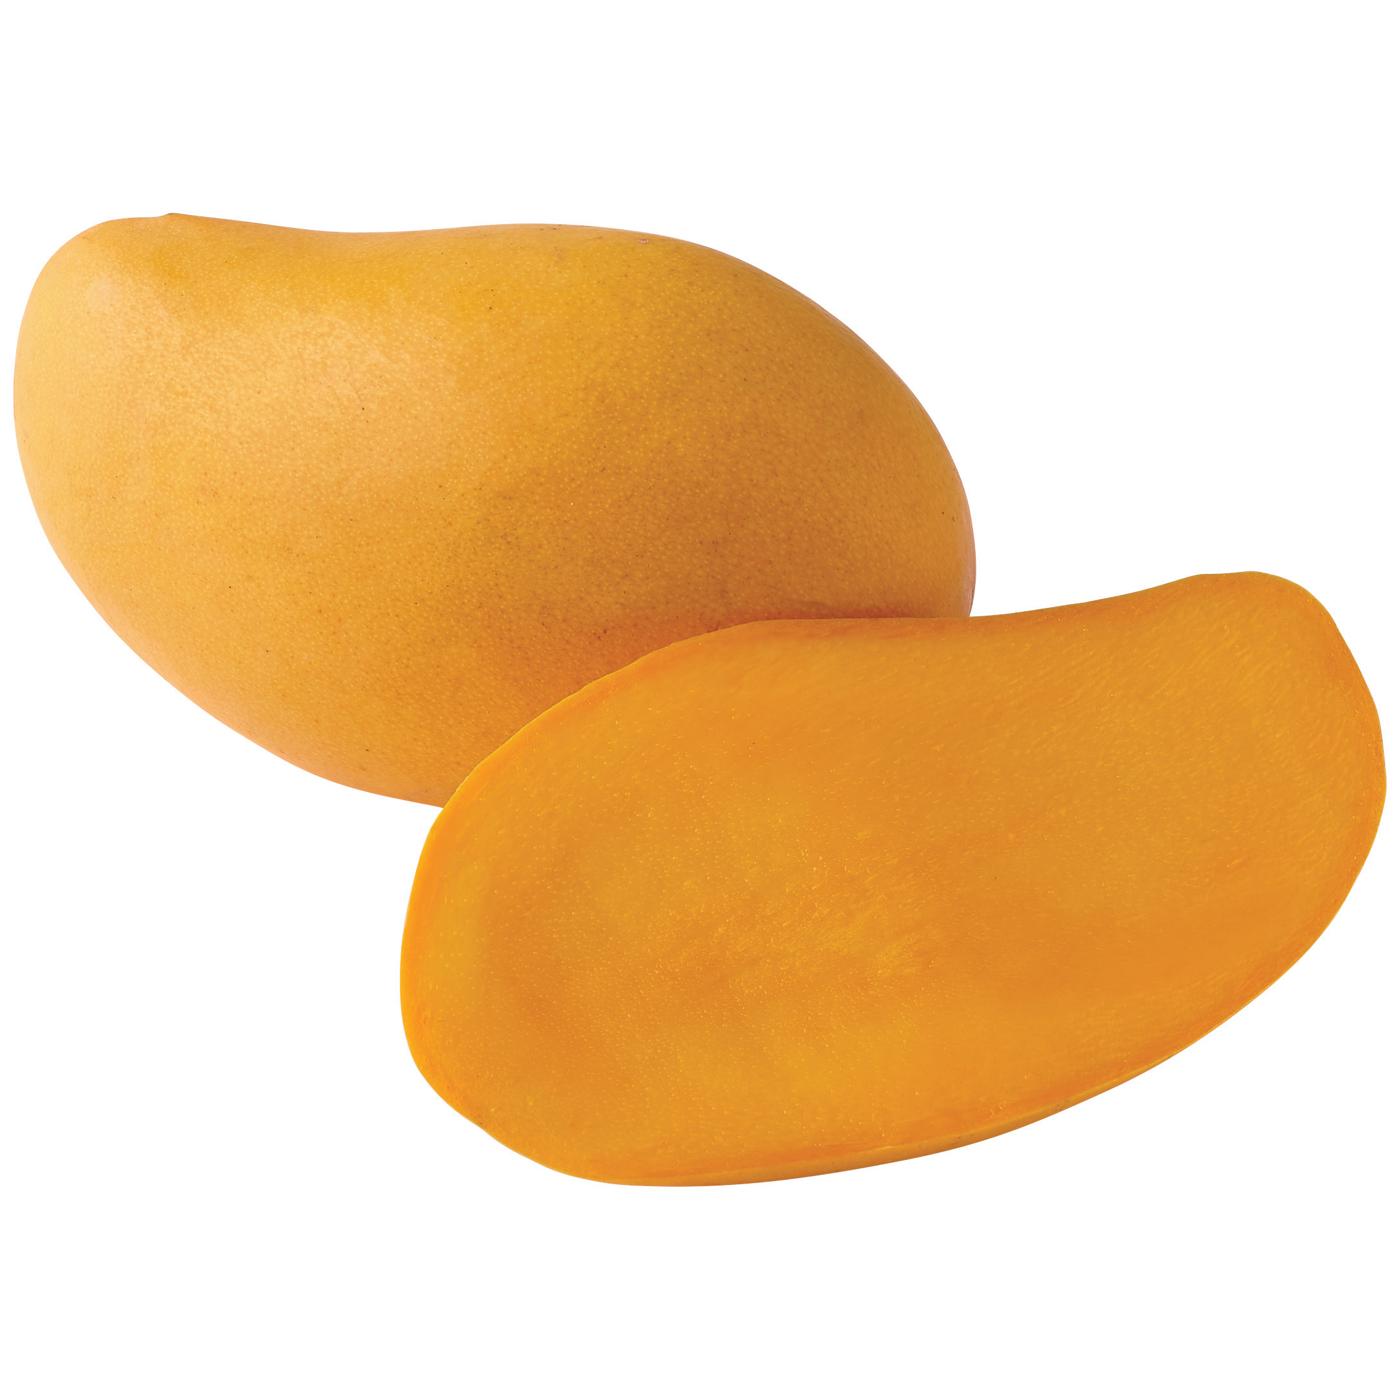 Fresh Small Ataulfo Mango; image 4 of 4